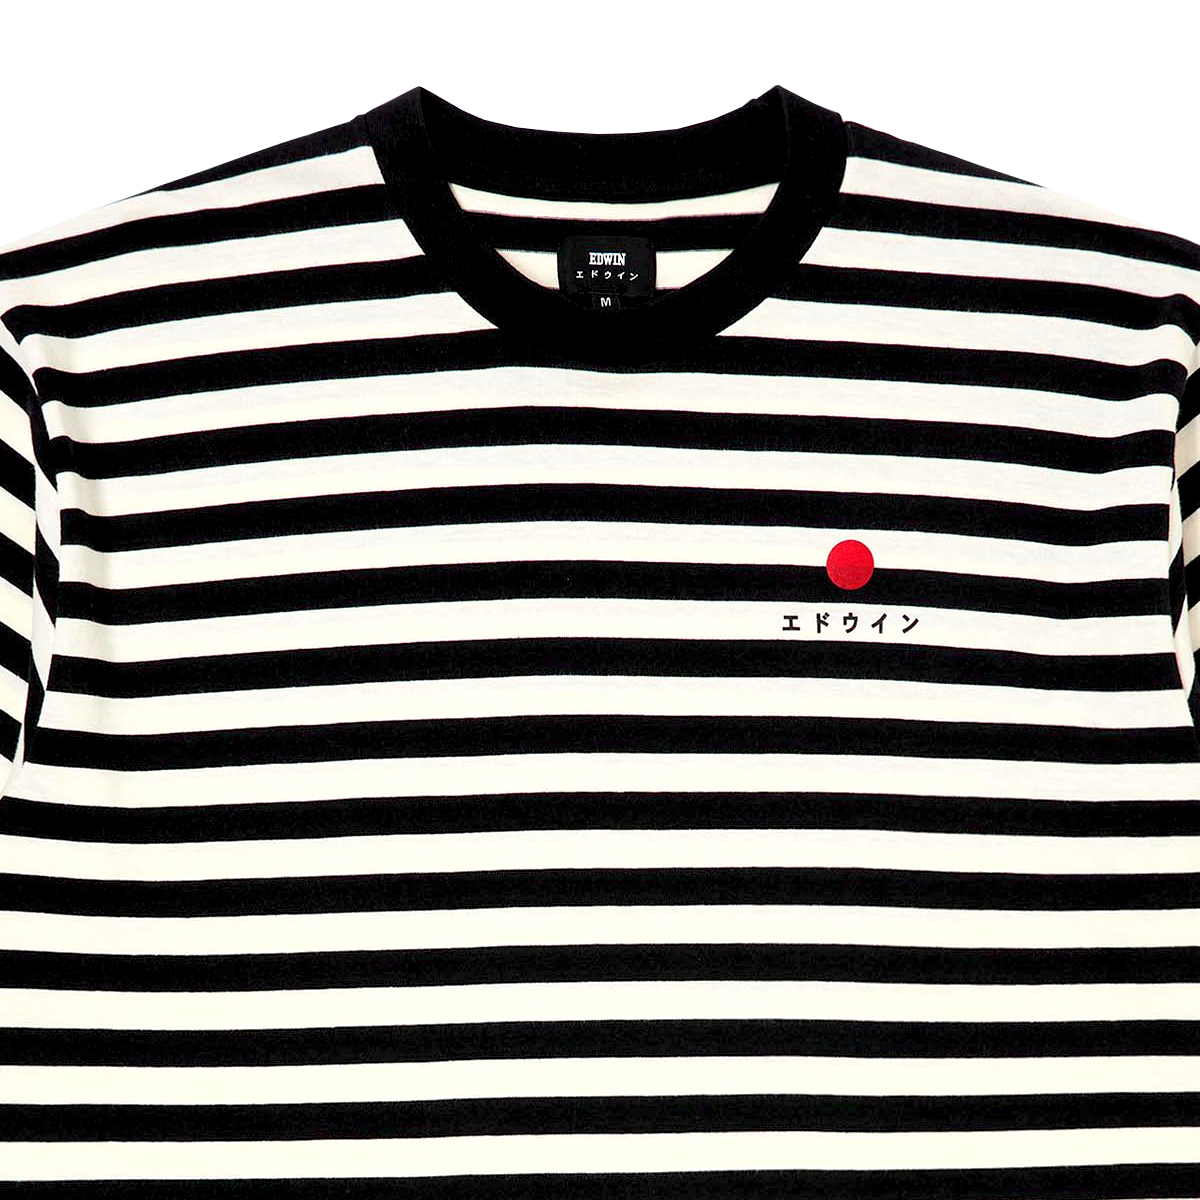 Basic Stripe Shirt - Regular Tee - Black White